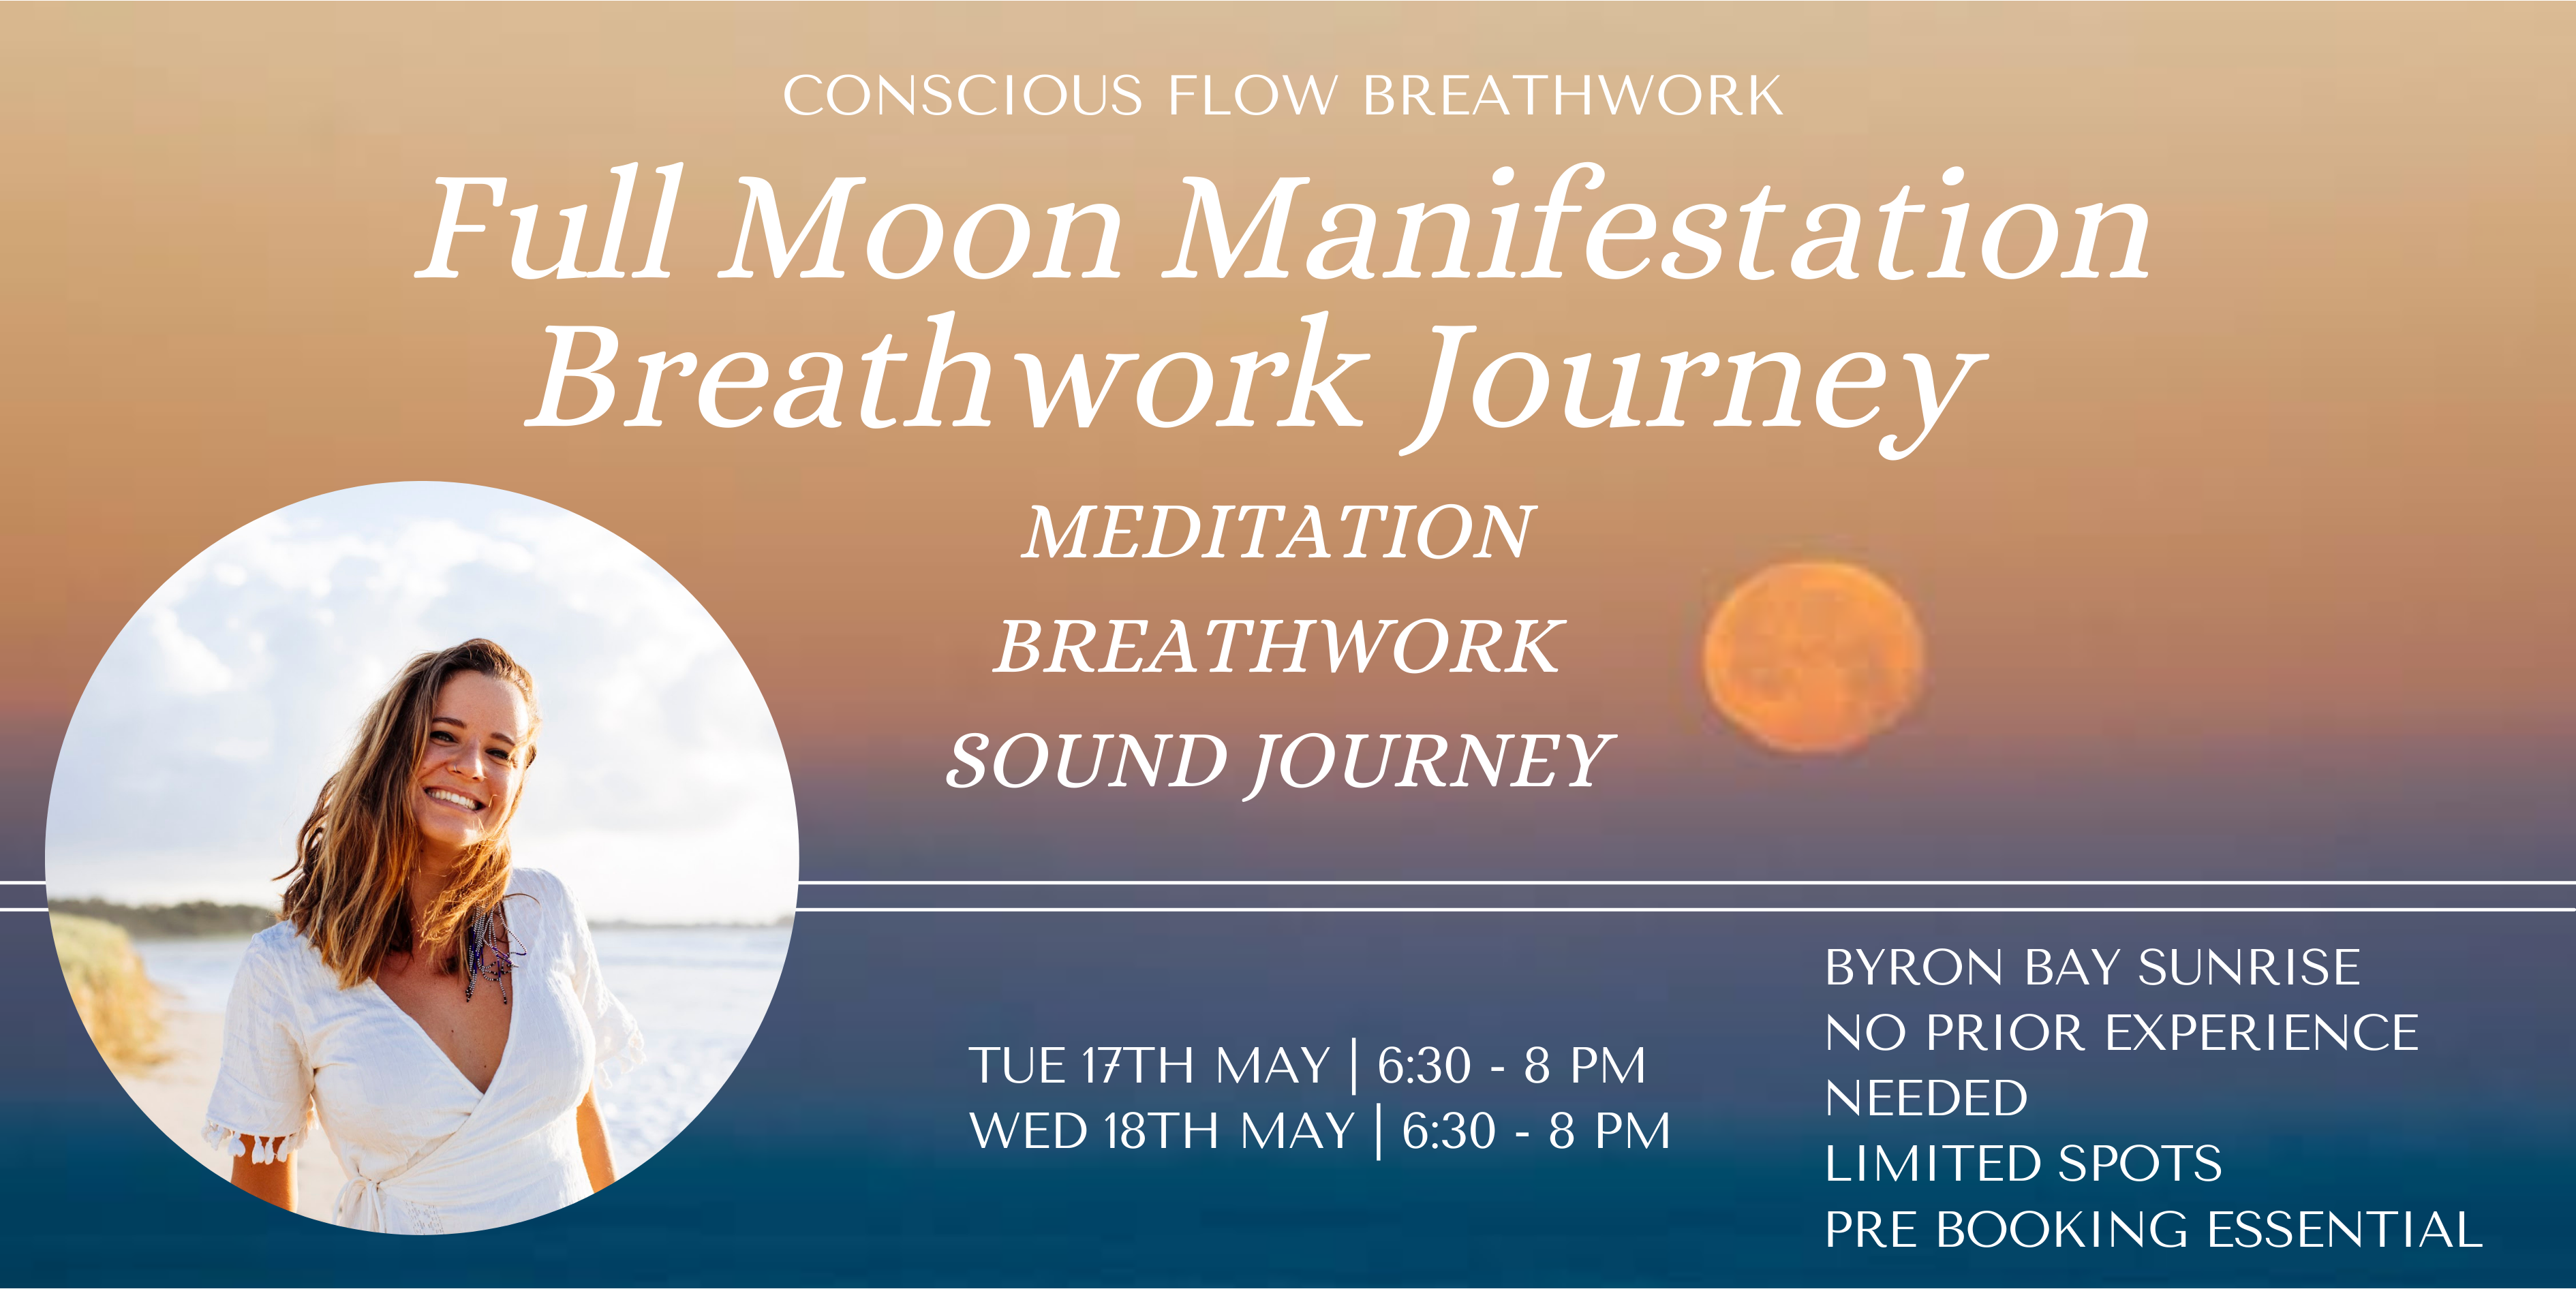 Full Moon Manifestation Breathwork Journey Tickets, Conscious Flow